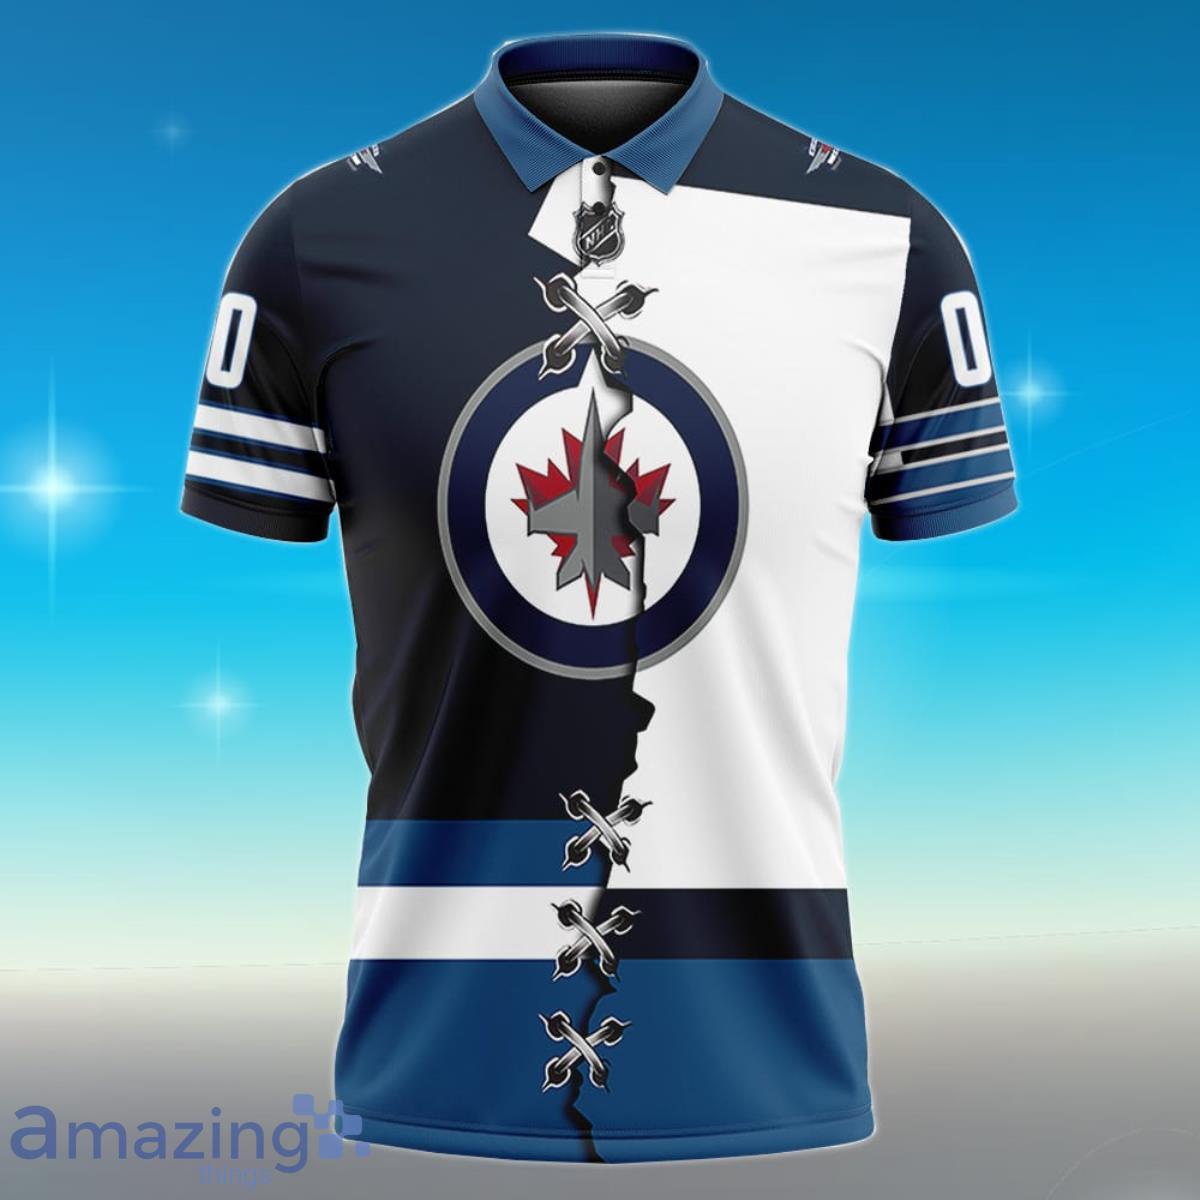 Winnipeg Jets Personalized Name 3D T-Shirt - T-shirts Low Price